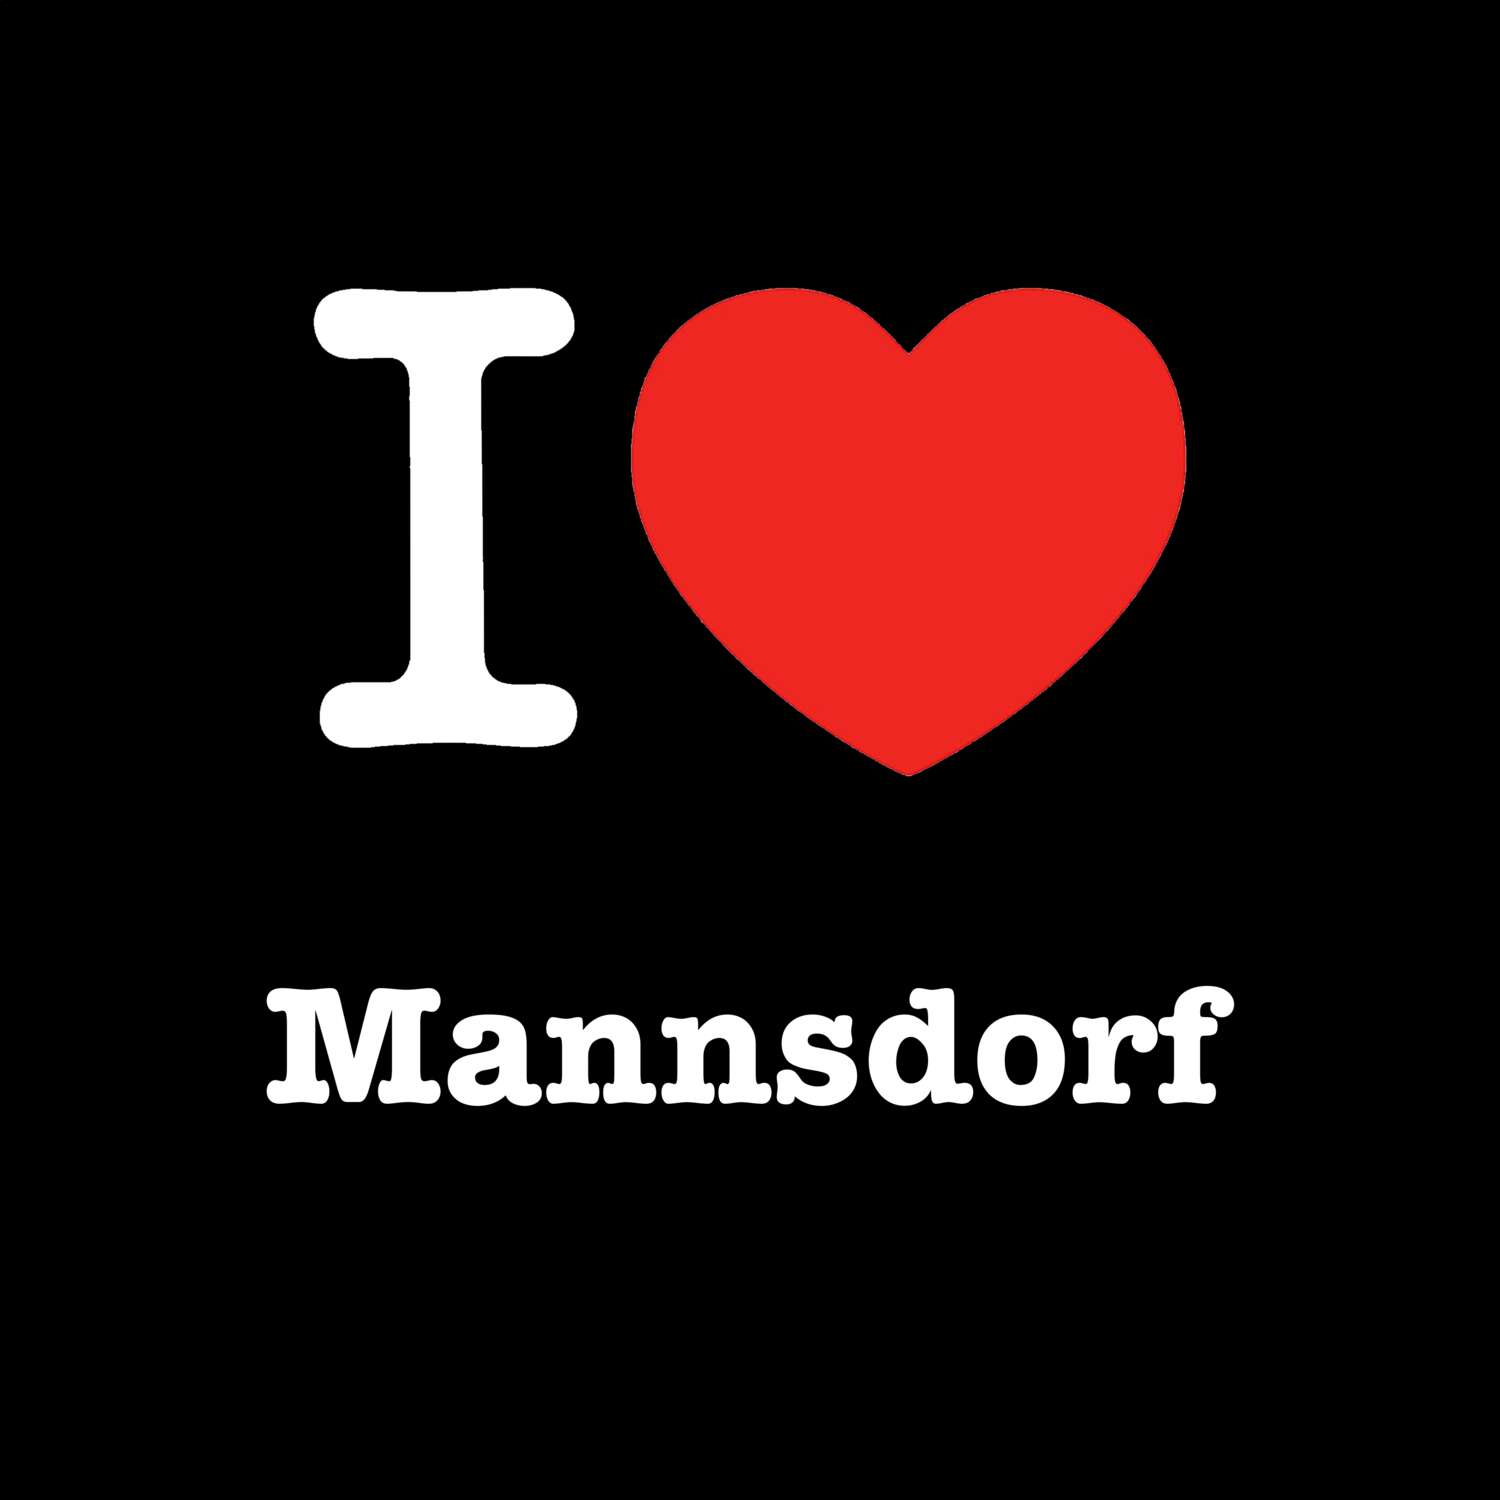 Mannsdorf T-Shirt »I love«